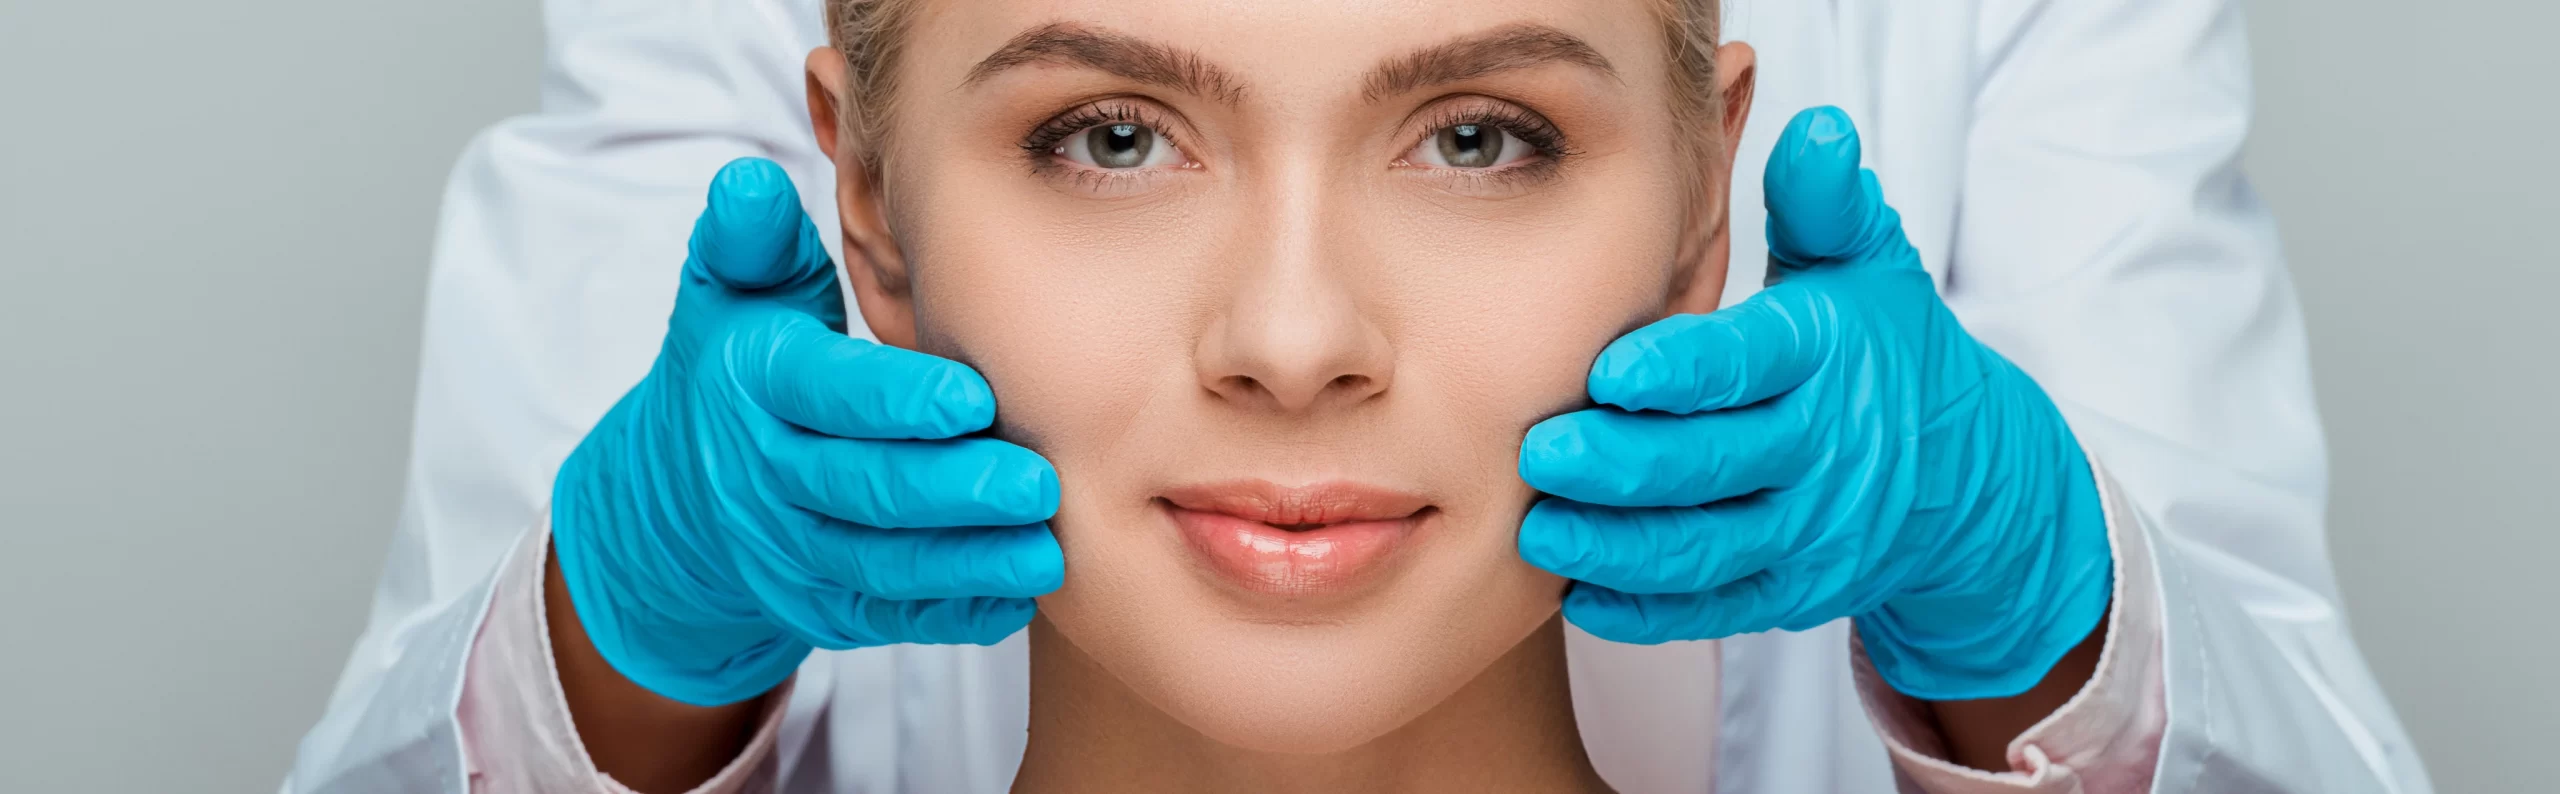 Face Shaping & Facial Contouring Treatments